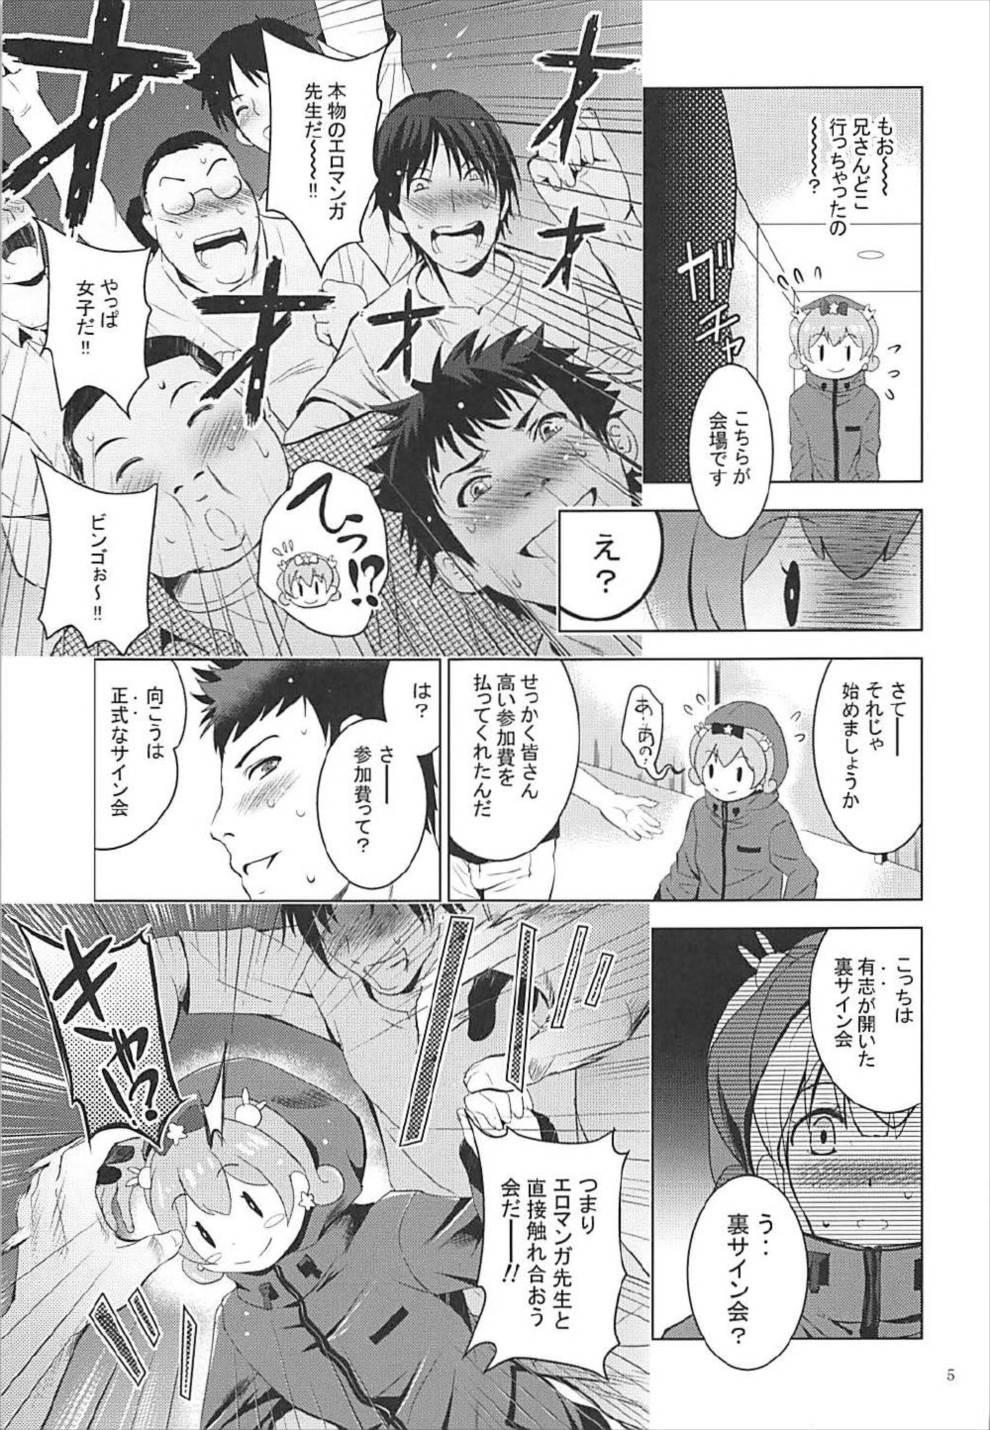 Gay Gloryhole MOUSOU Mini Theater 42 - Eromanga sensei Closeups - Page 4